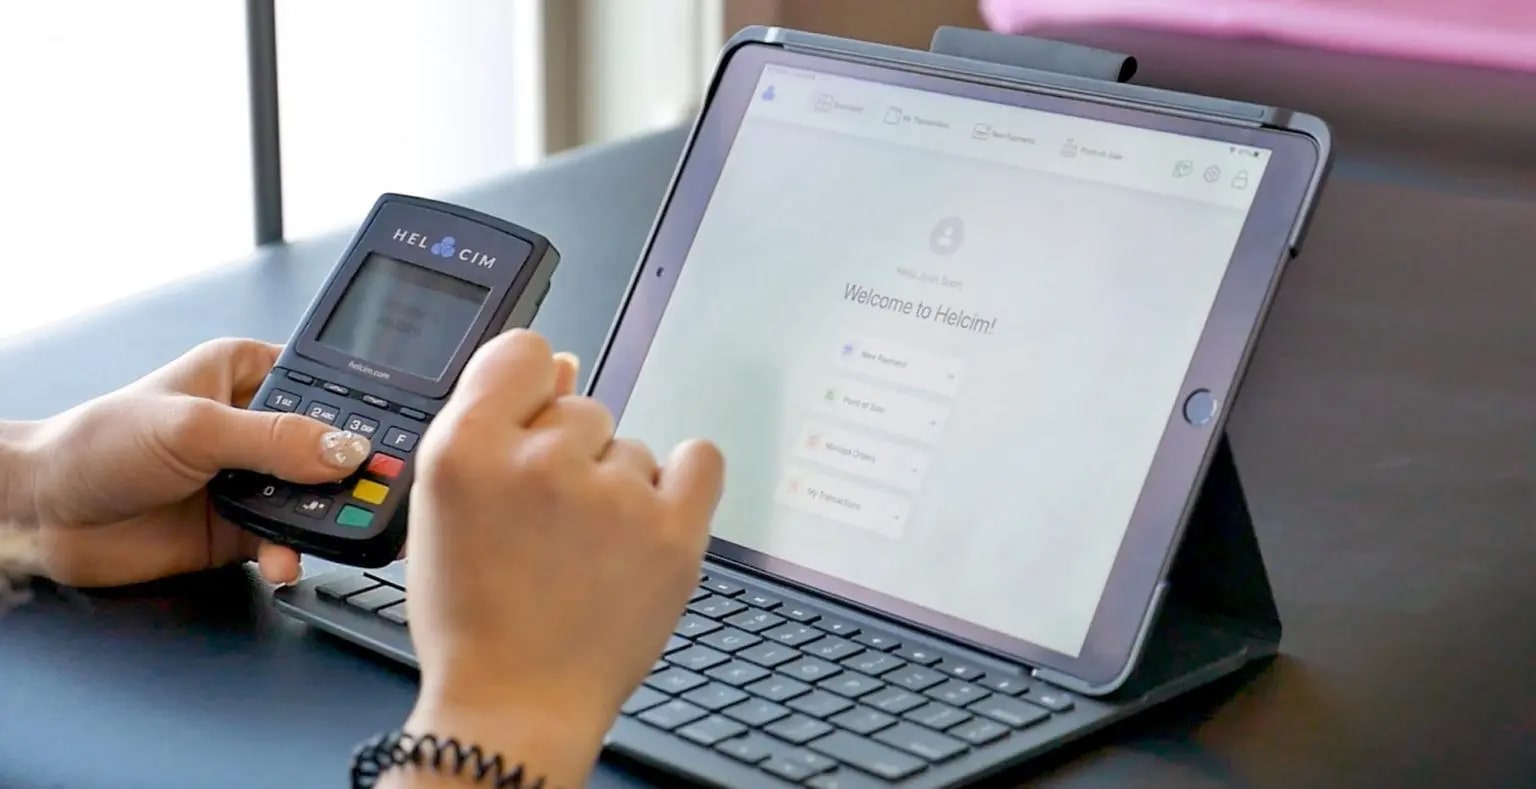 Helcim card reader and the Helcim payment platform on a laptop